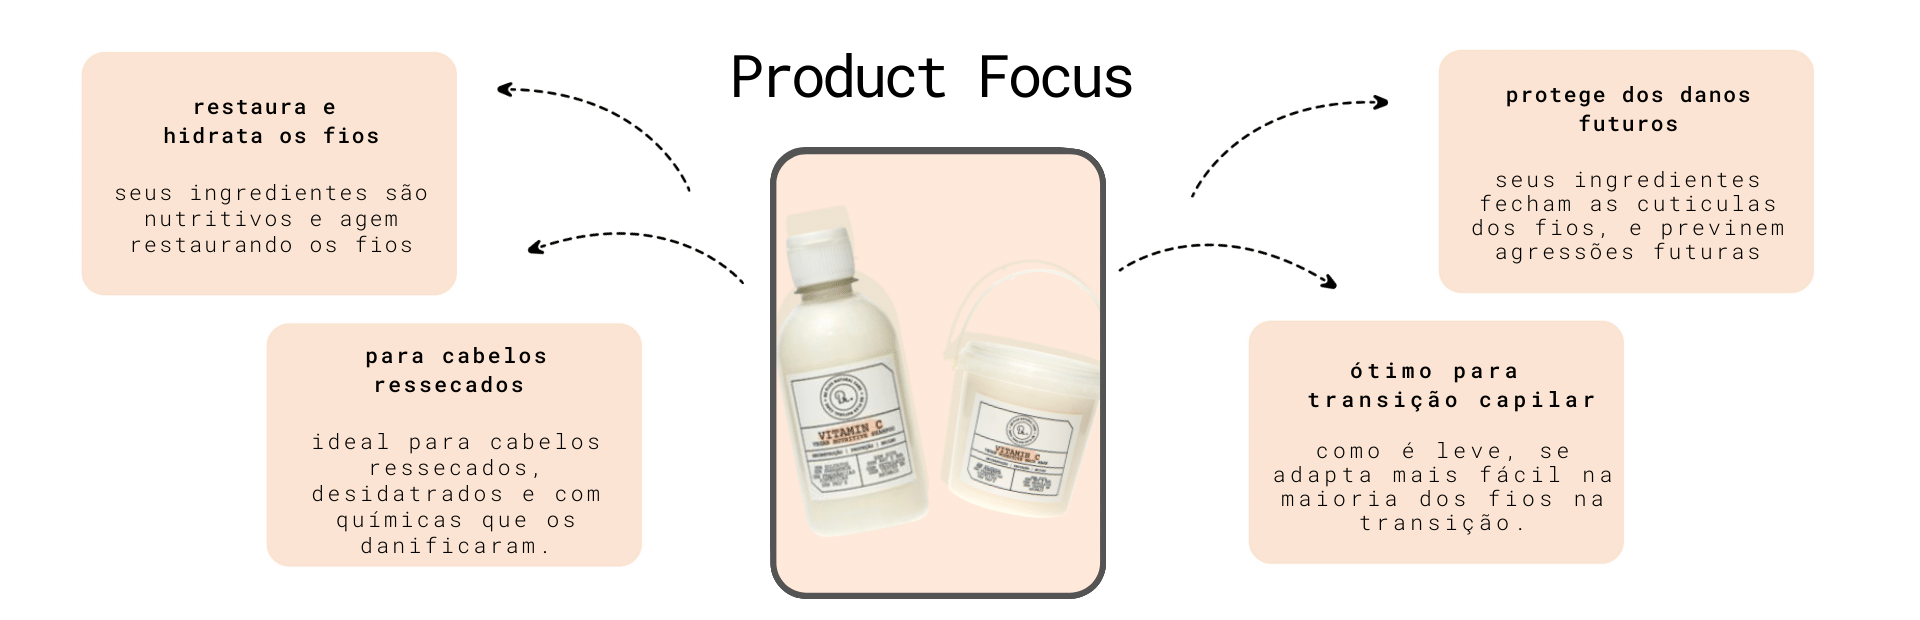 [Banner produto] mascara vit c